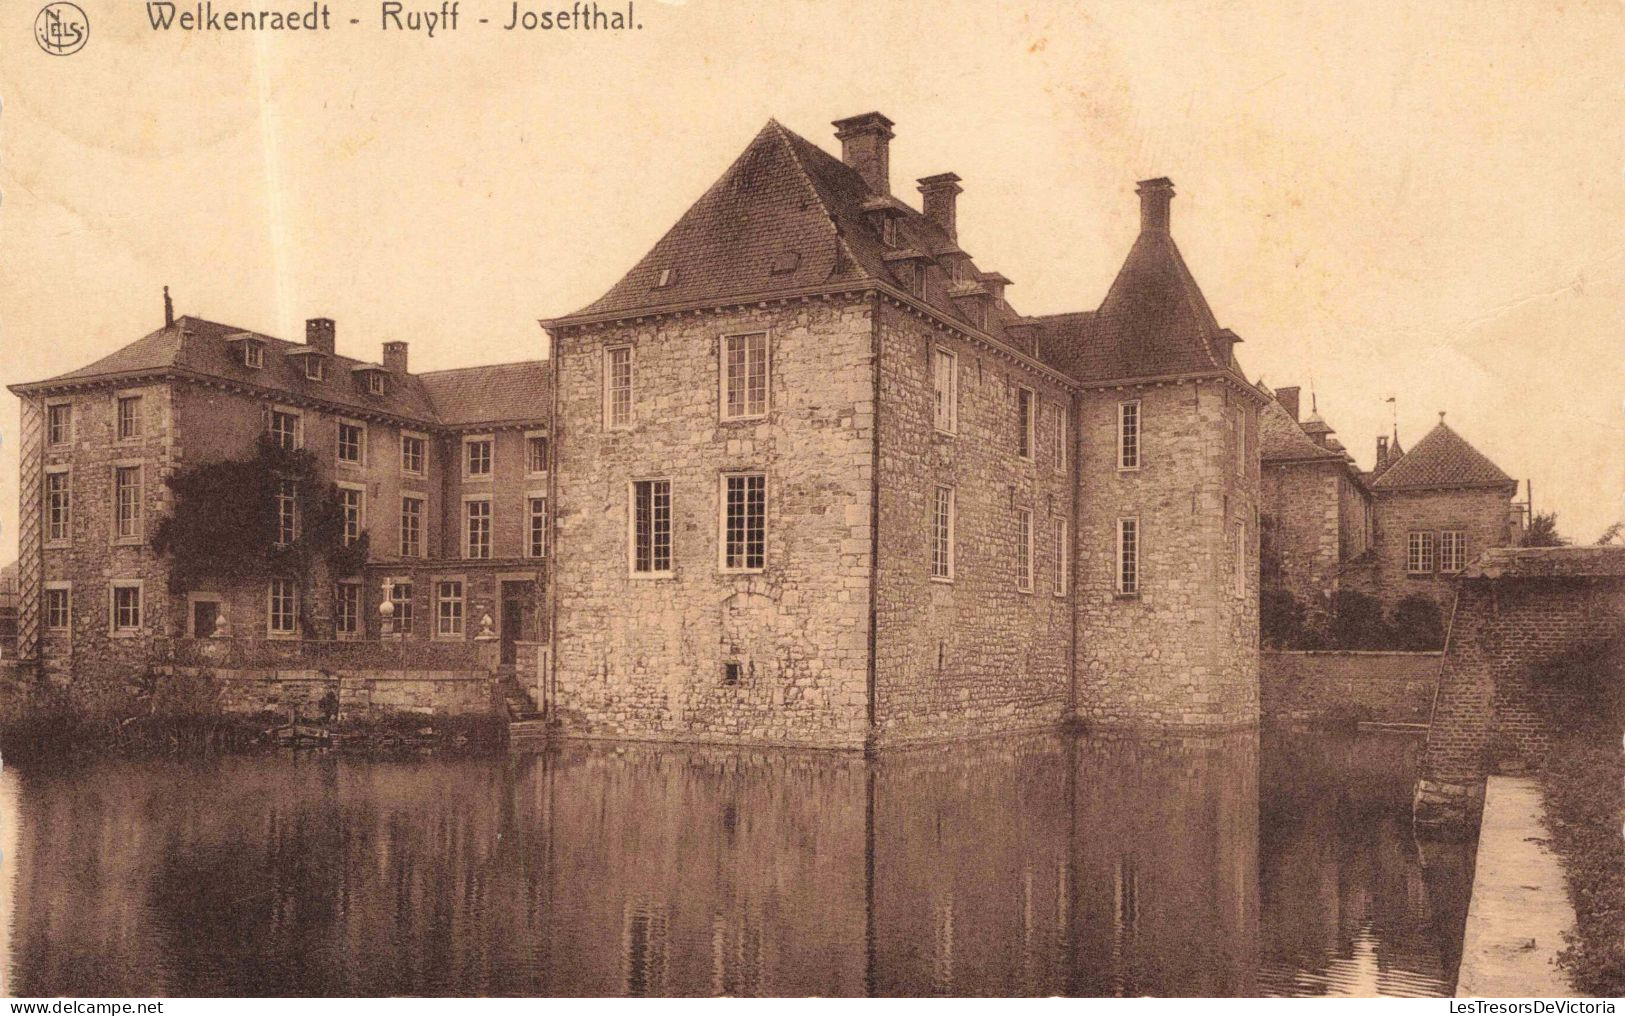 BELGIQUE - Verviers - Welkenraedt - Ruyff - Josefthal - Carte Postale Ancienne - Verviers